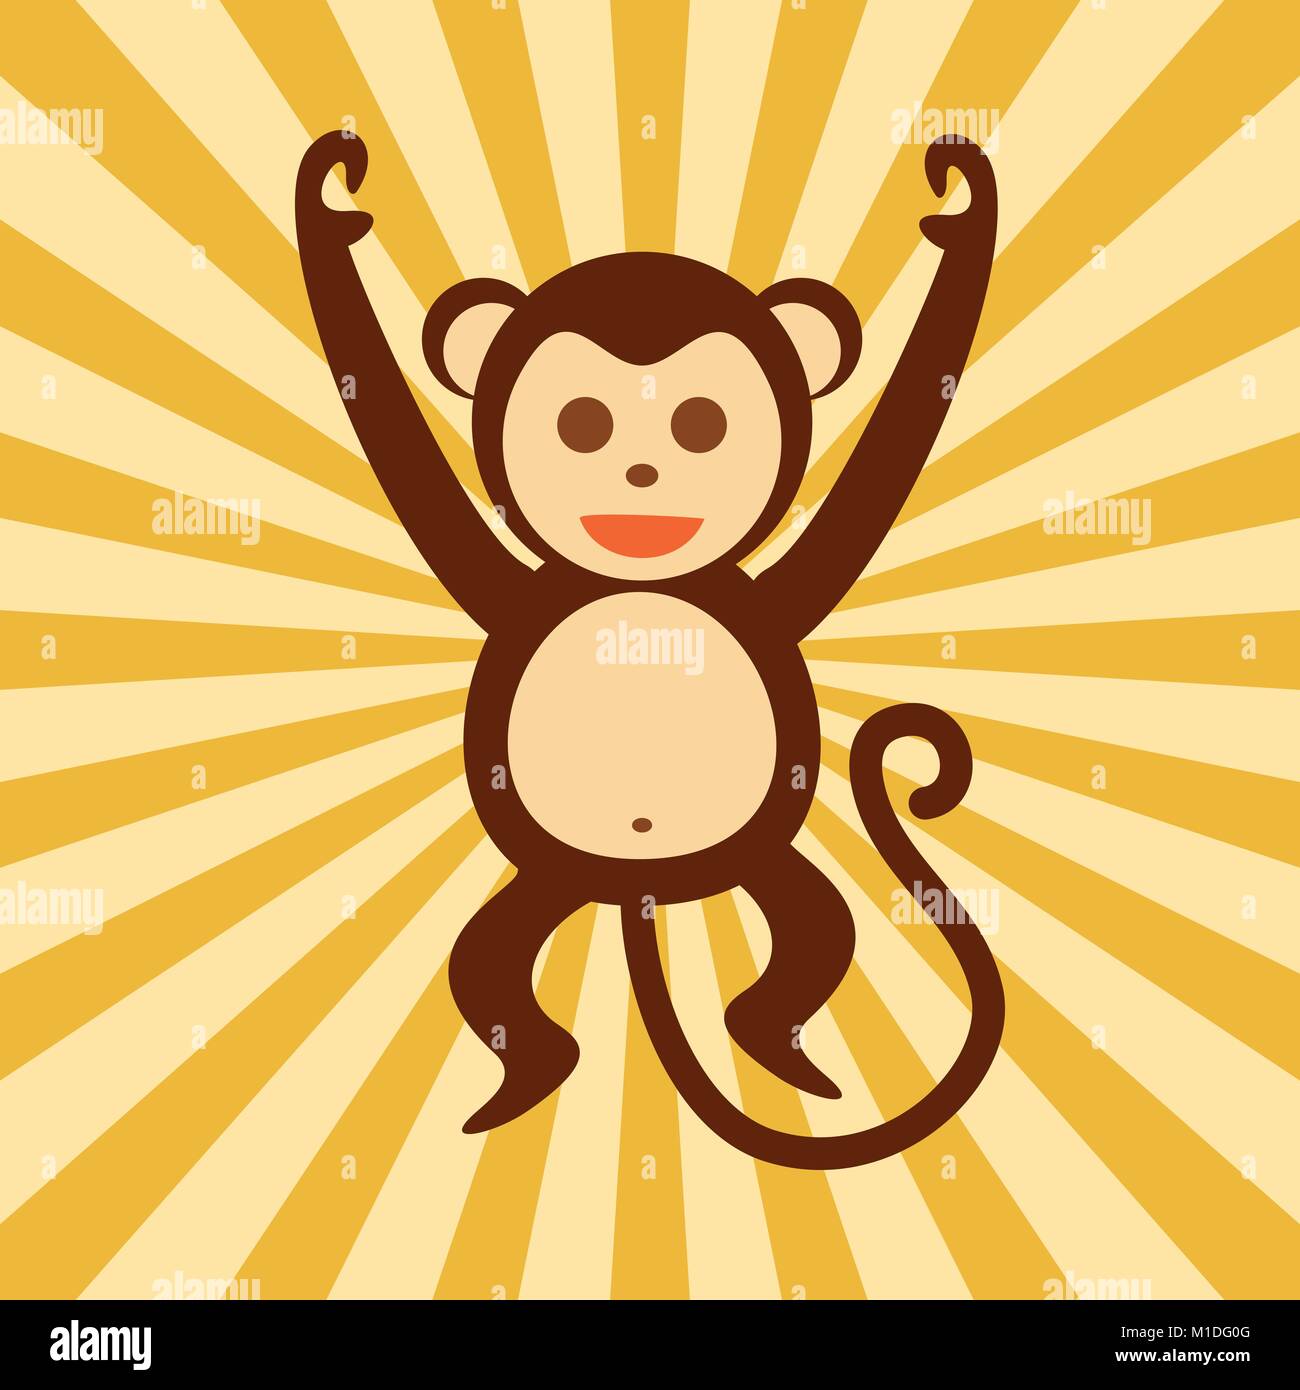 Happy Monkey Action Vector Graphic Illustration Design Stock Vector